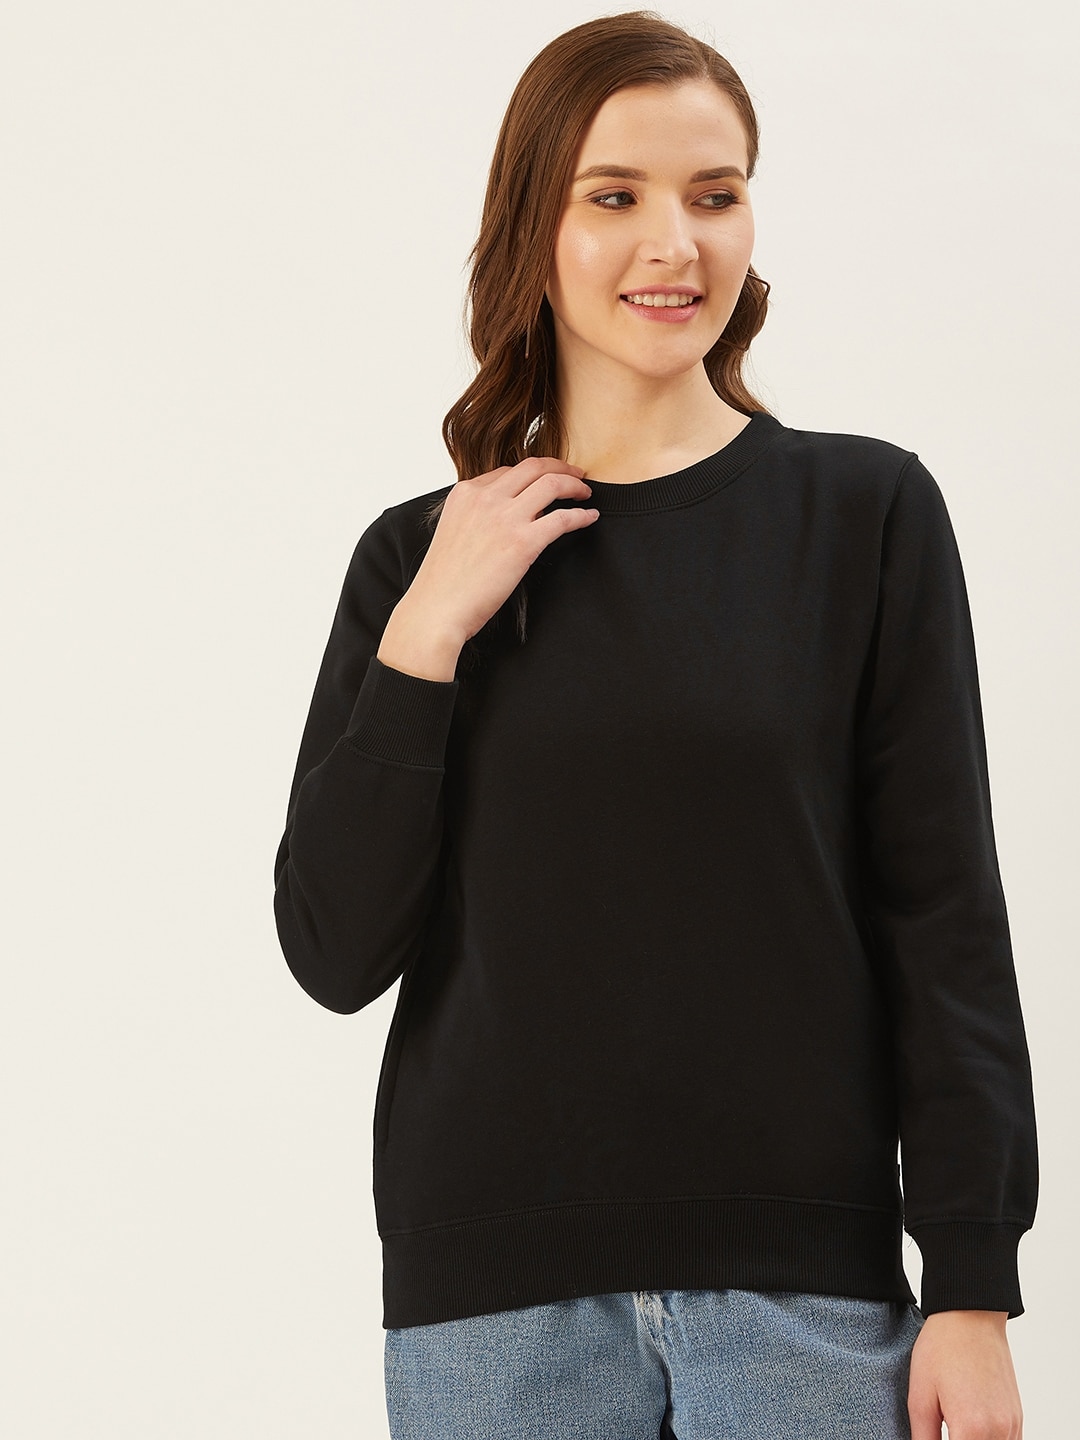 Madame Women Black Solid Sweatshirt Price in India